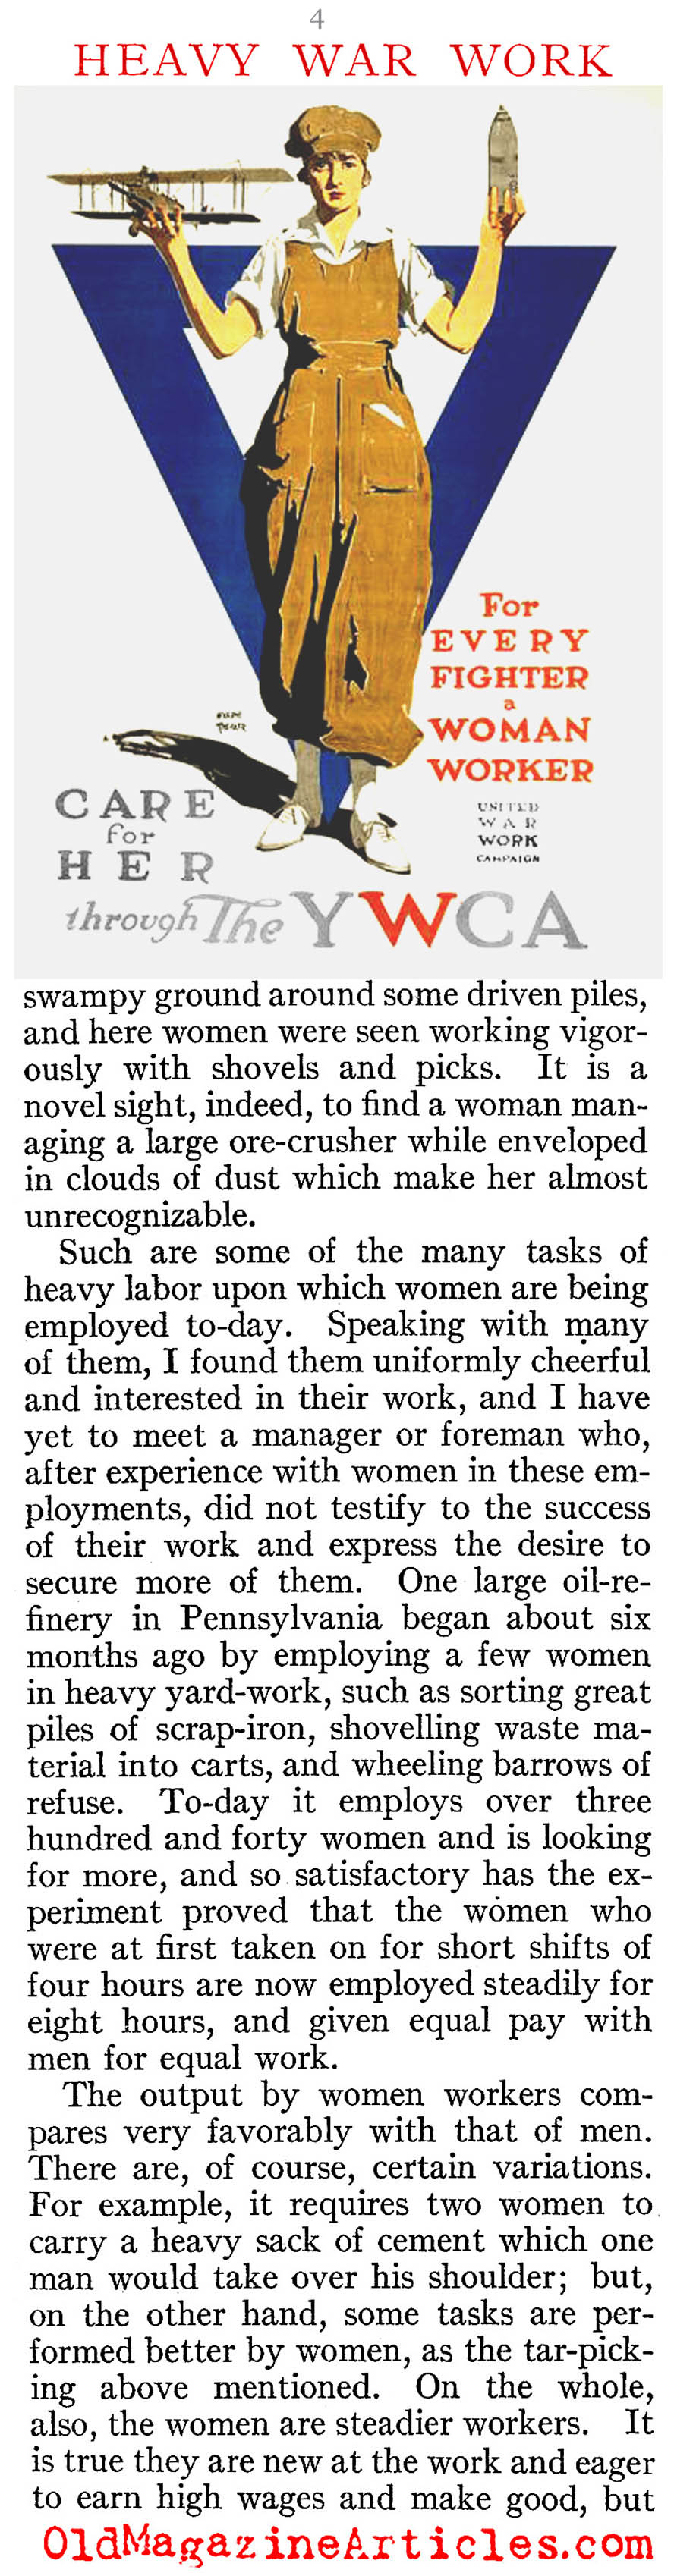 Women Can Do The Heavy War Work (Scribner's Magazine, 1919)